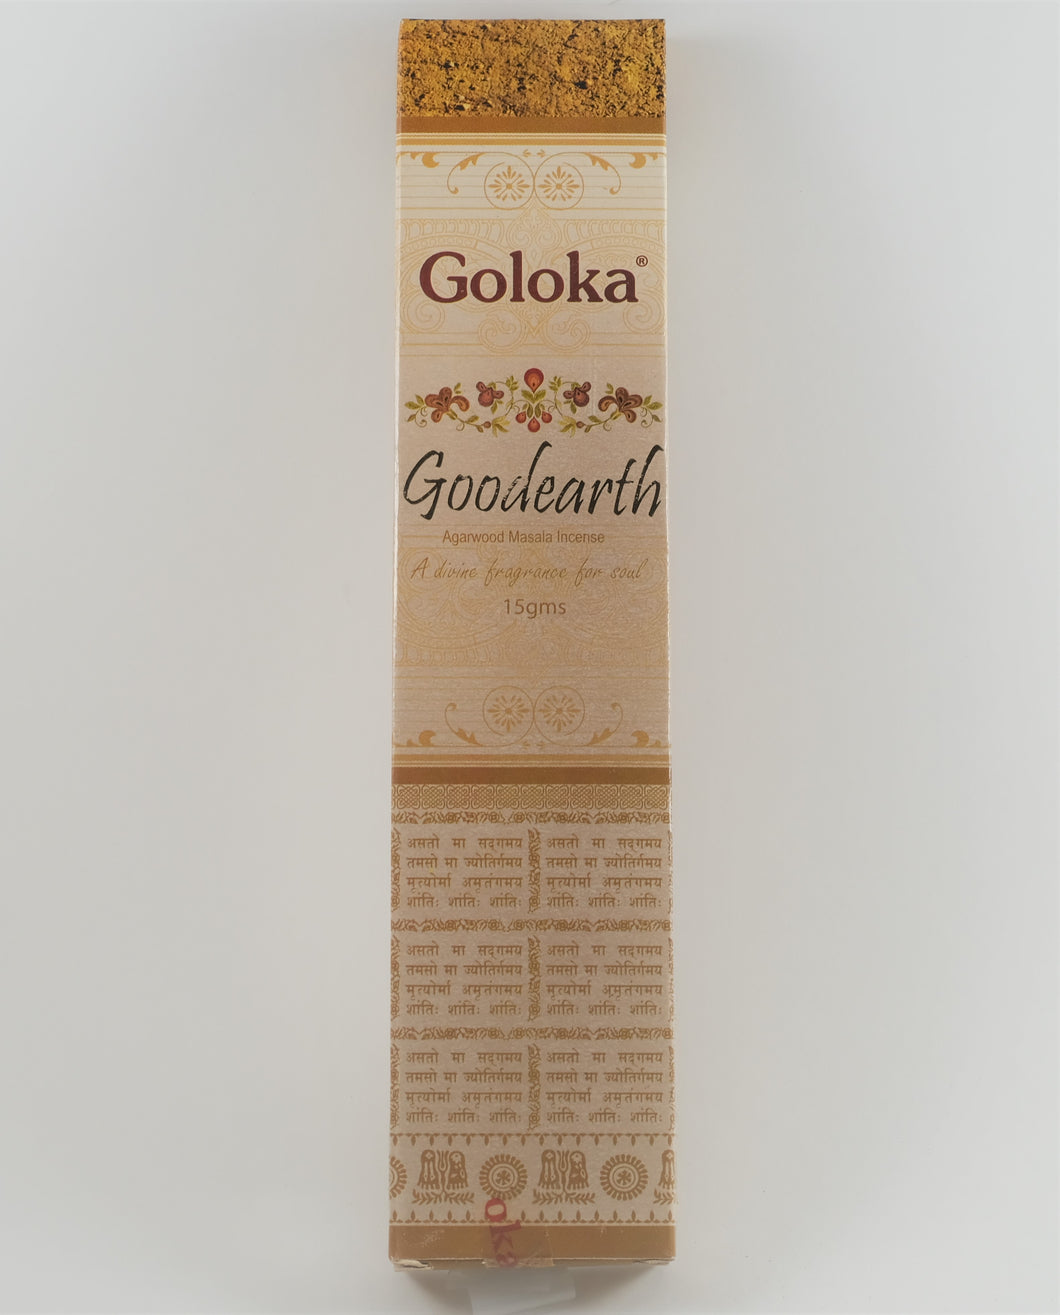 Goloka Goodearth - 15g